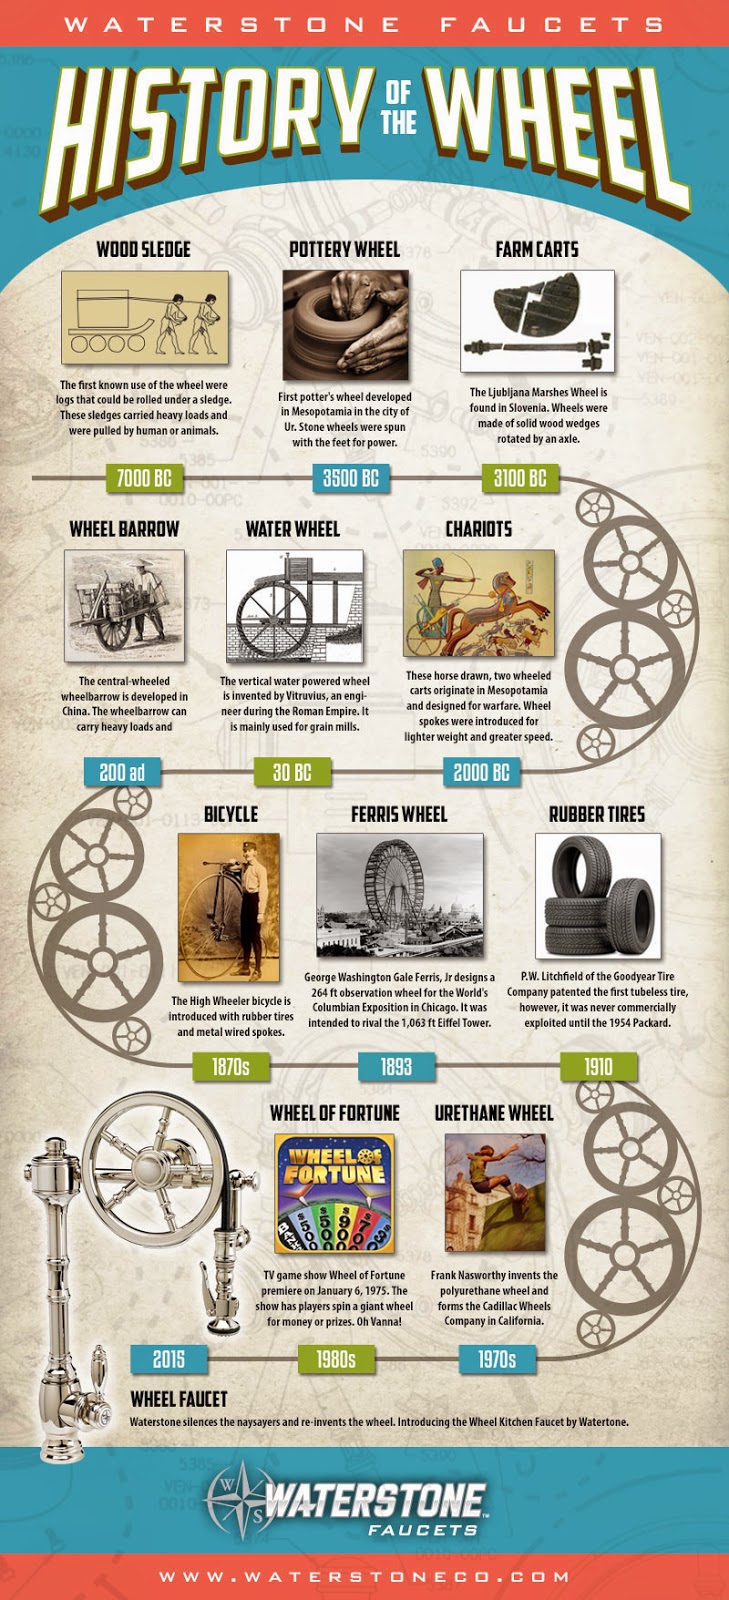 History of the wheel